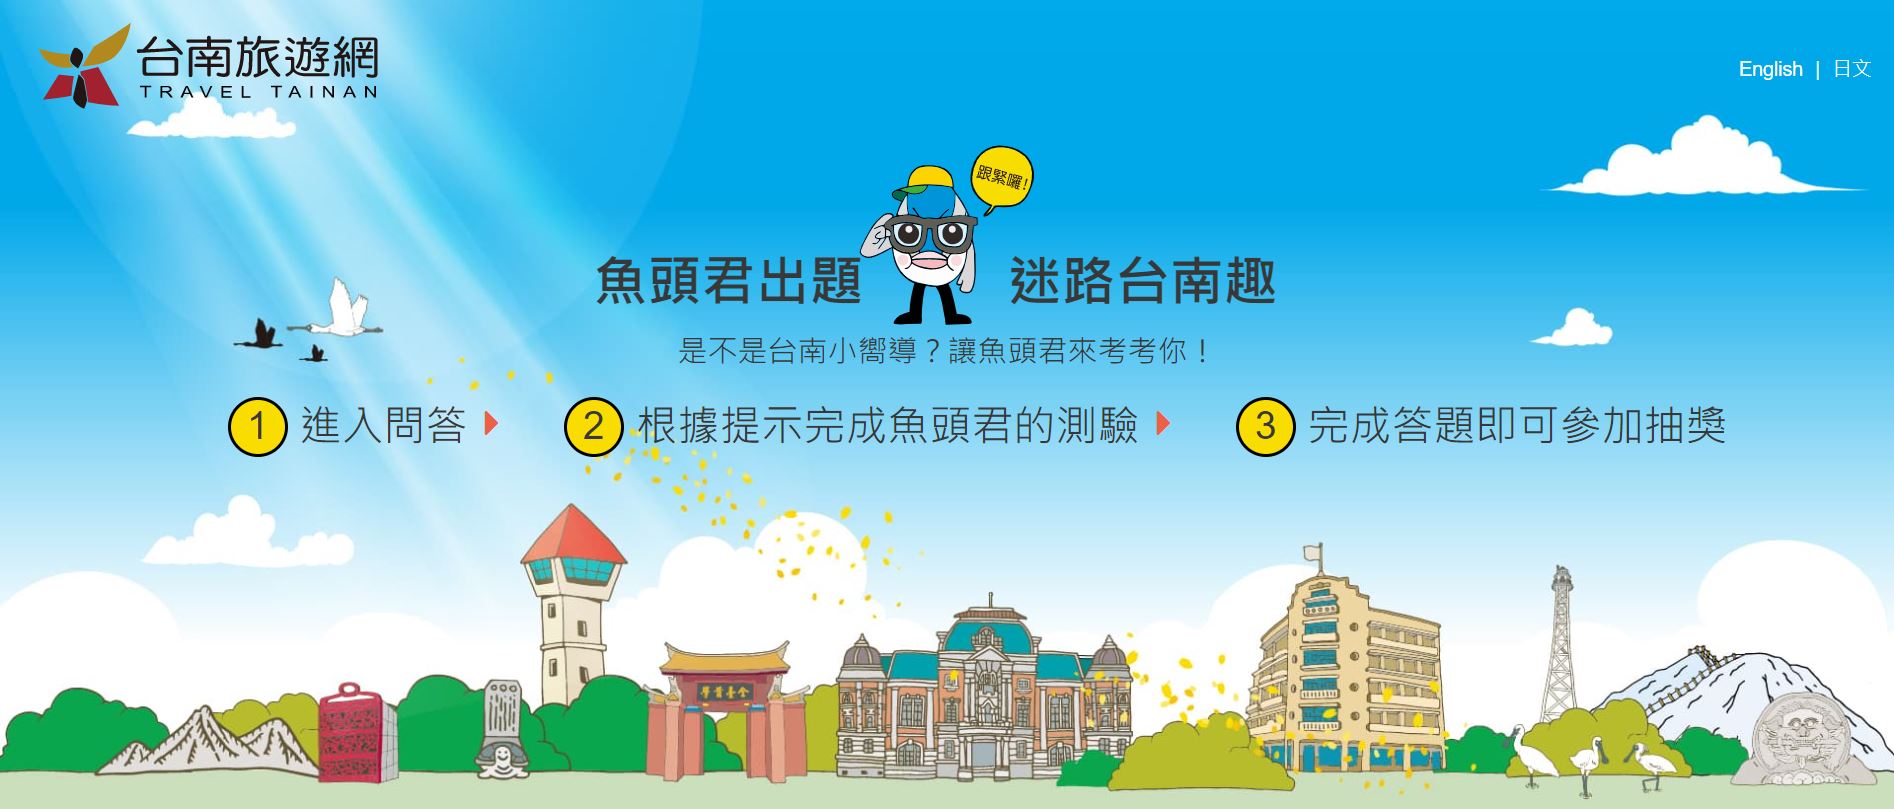 Bahasa Mandarin, Inggris, Jepang telah sekaligus menarik orang asing untuk mengunjungi Fucheng. Sumber: Diambil dari Balai Kota Tainan